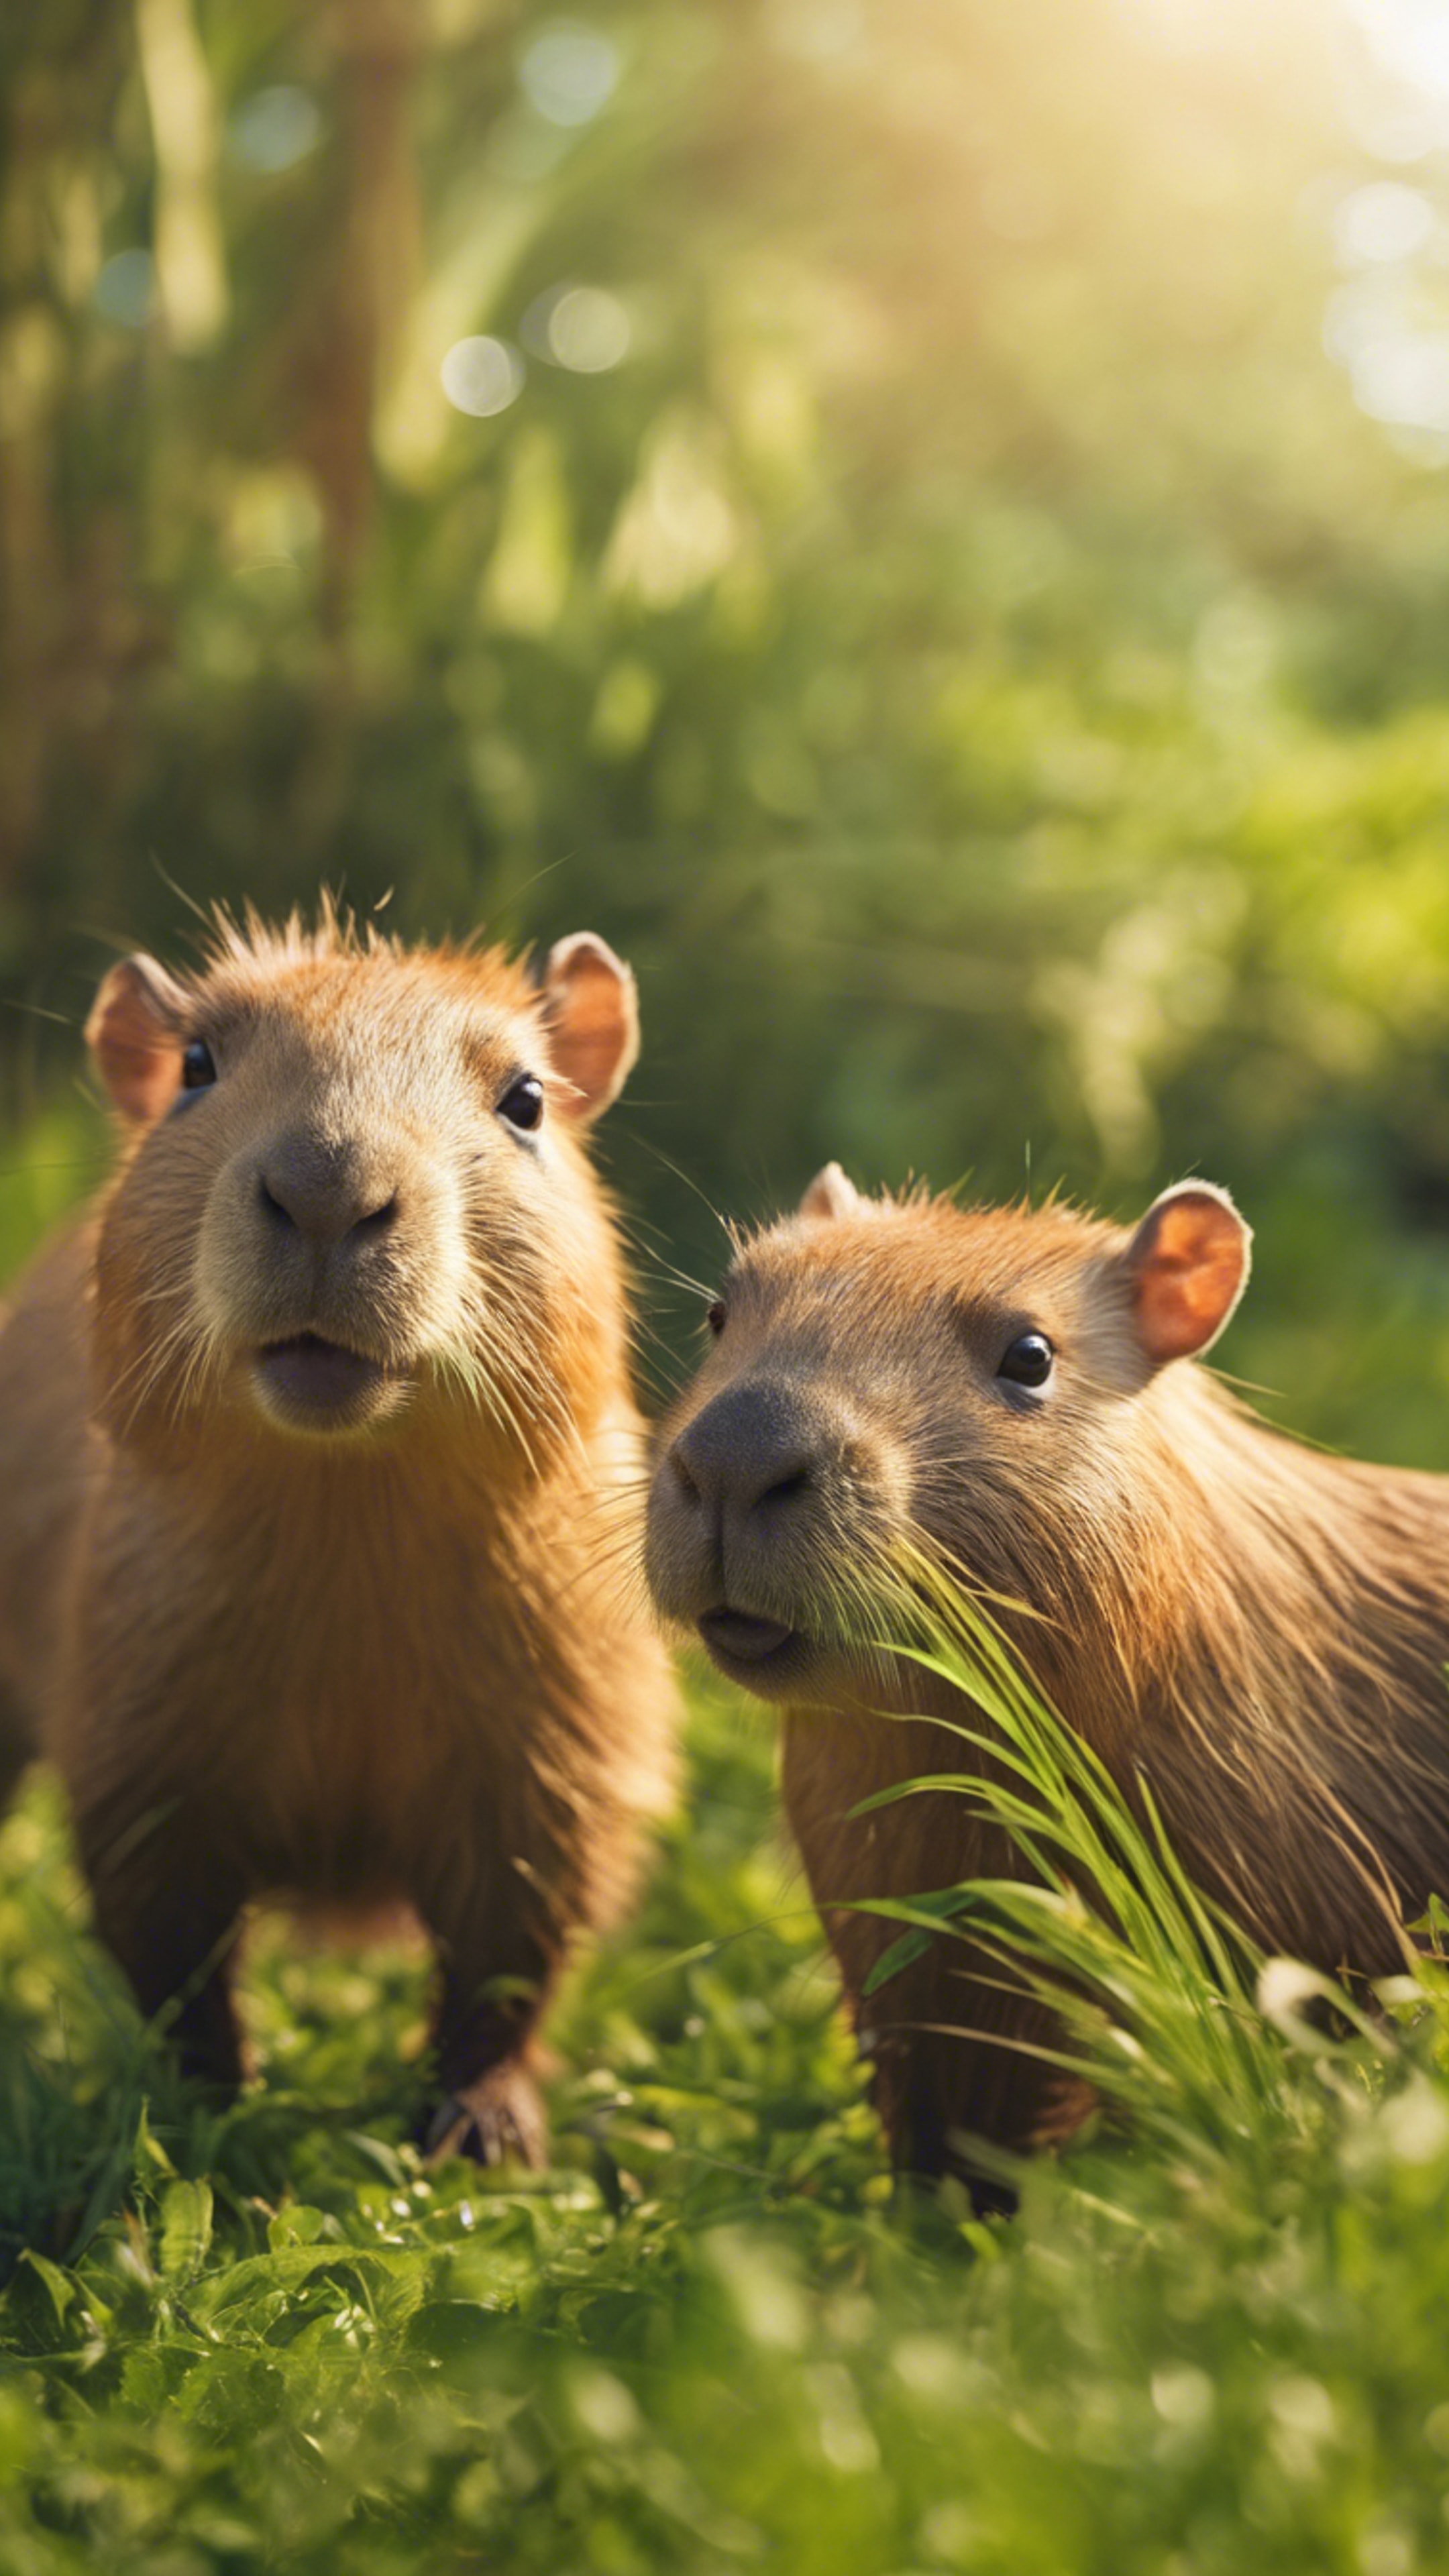 A group of playful capybara kids in a lush green meadow under the warm sunlight. Papel de parede[941f99d4da544970bae4]